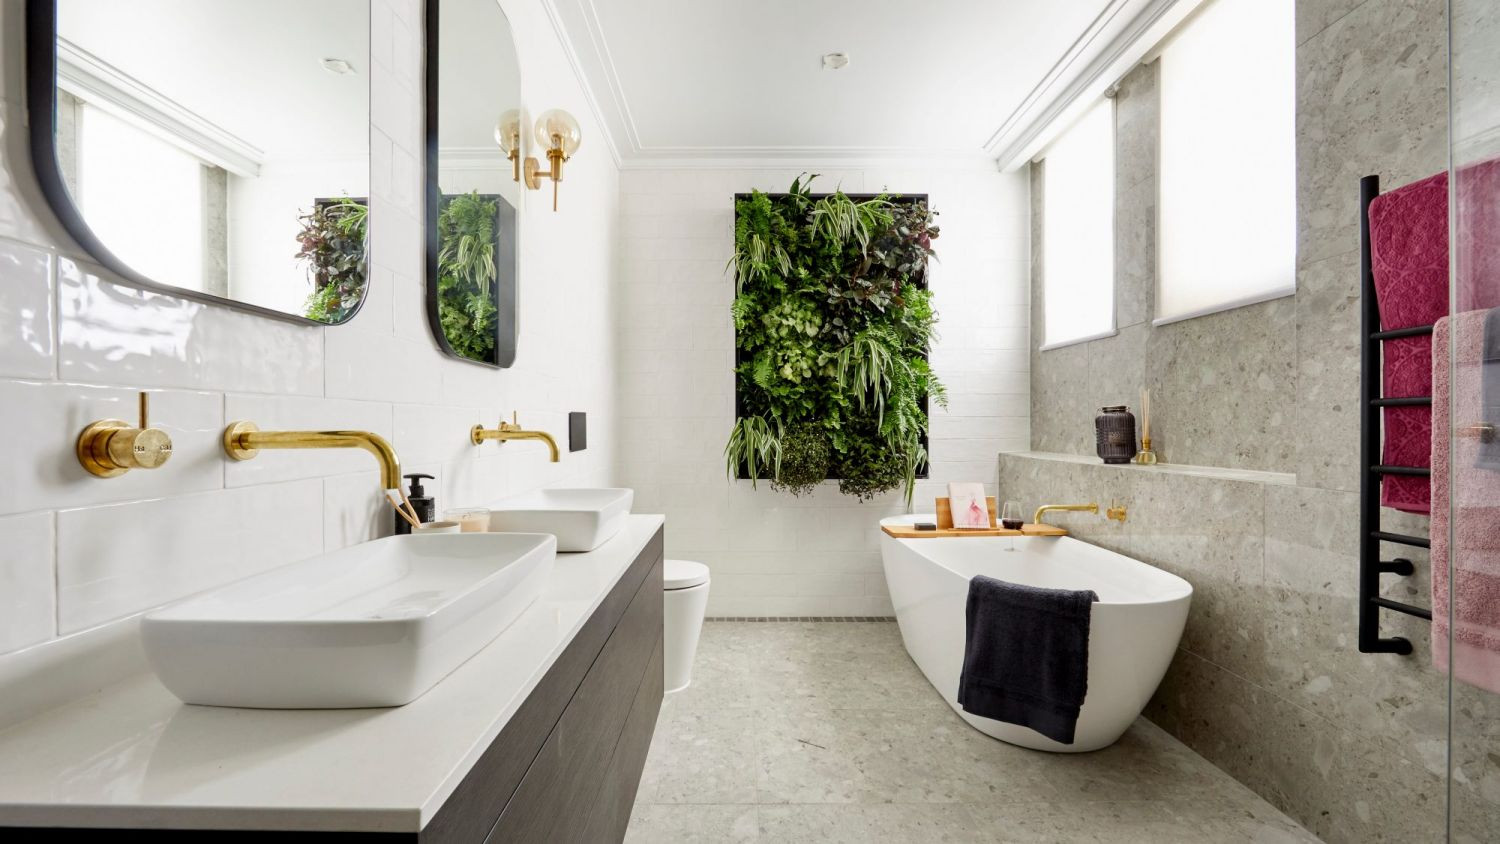 Bathroom Design Trends
 The biggest bathroom design trends of 2019